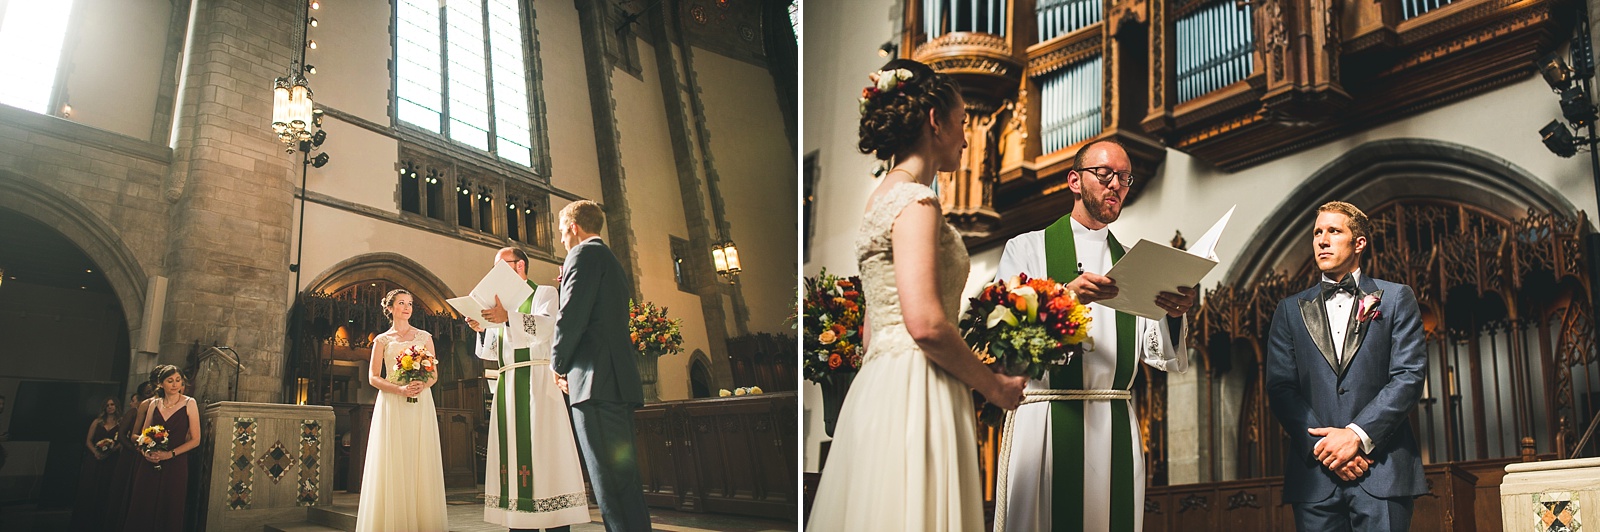 41 university of chicago rockefeller chapel wedding - University of Chicago Wedding Photos // Annemarie + Zach